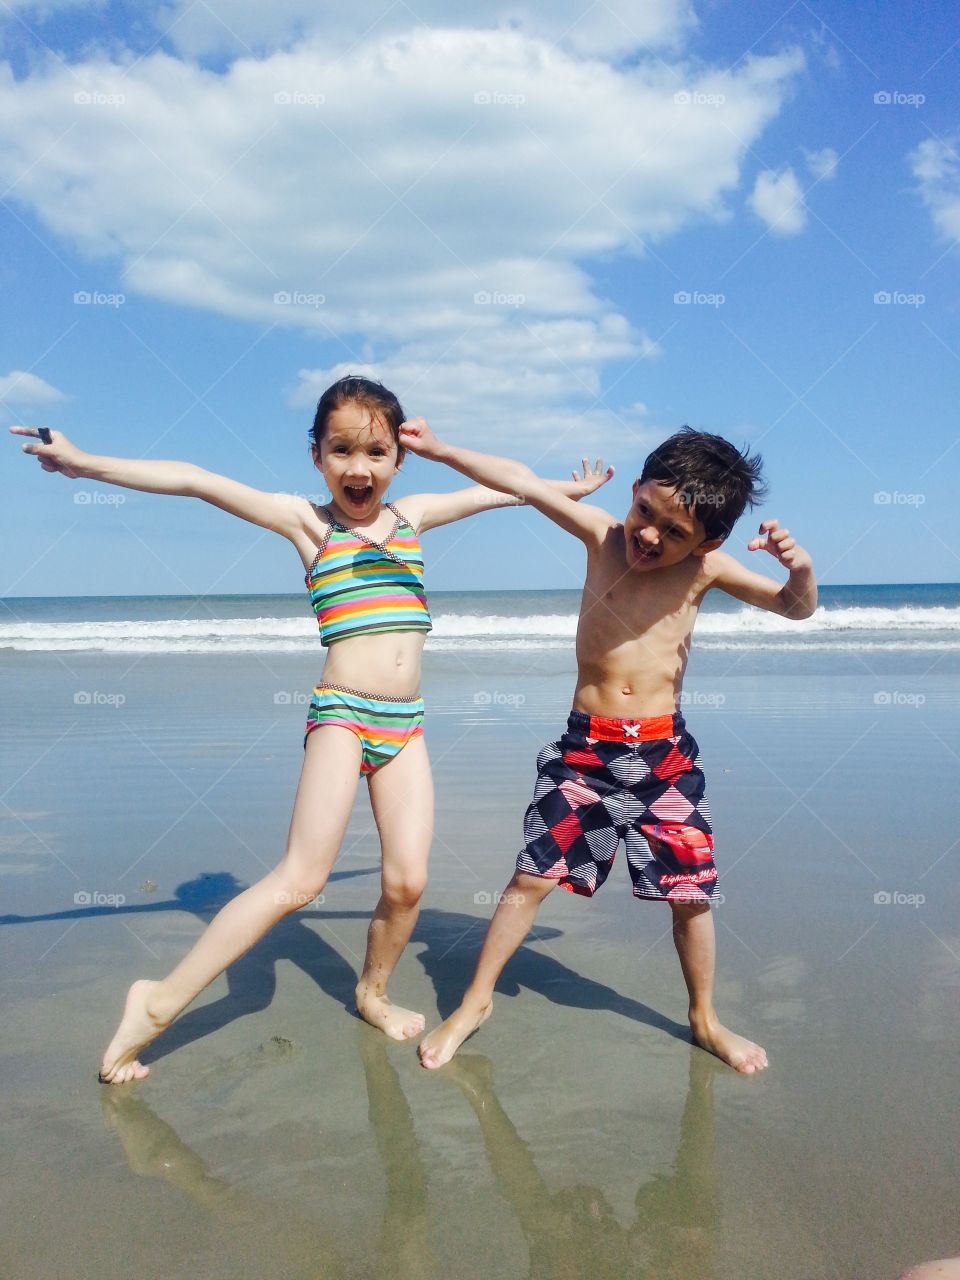 Siblings on the beach having fun.